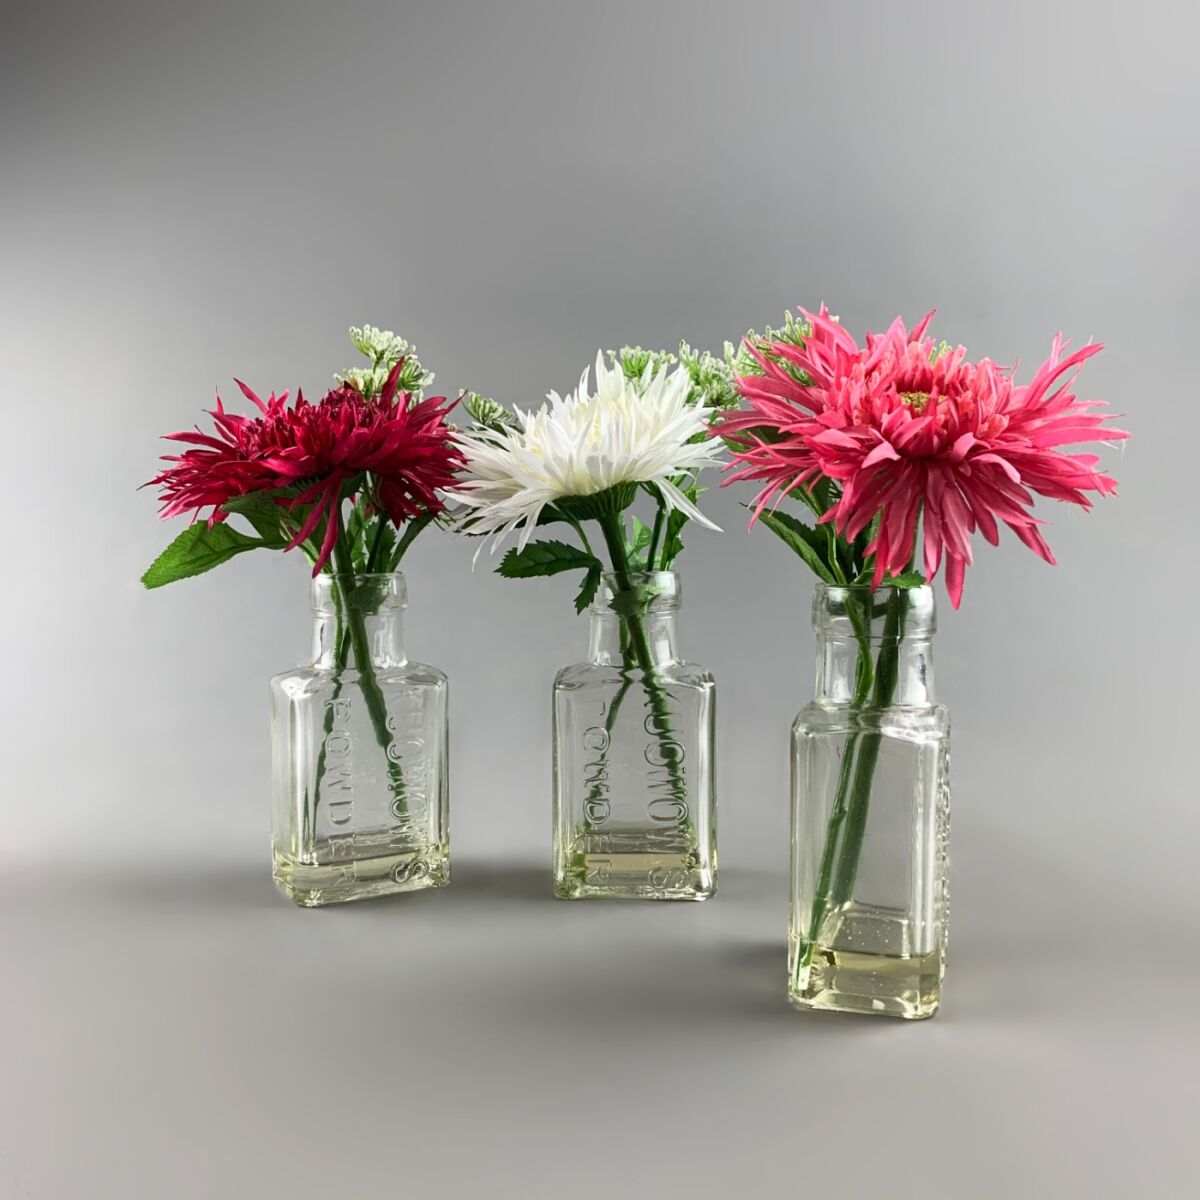 Flowers in Chemist Bottle, Gerbera Arrangement, 25 cm artificial flower &  foliage decor. Set of 3